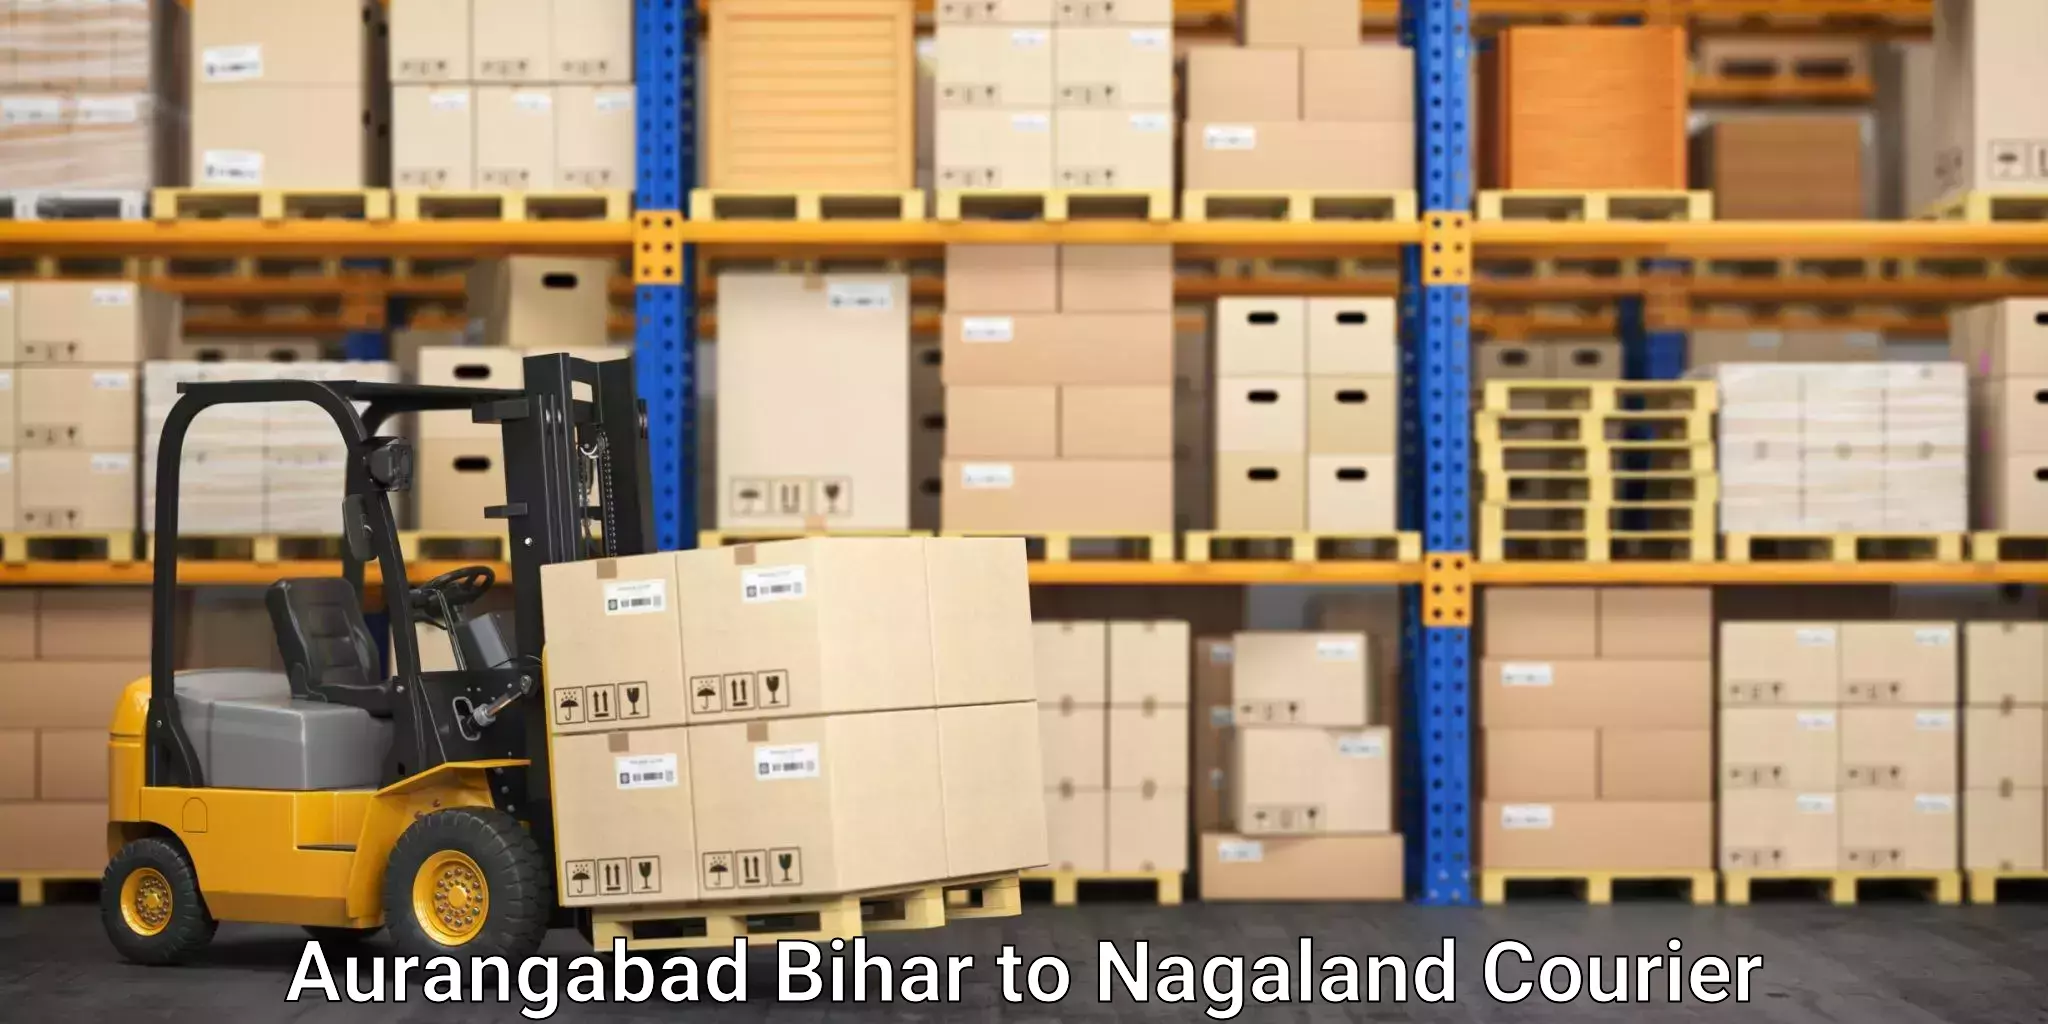 Furniture moving specialists Aurangabad Bihar to Nagaland